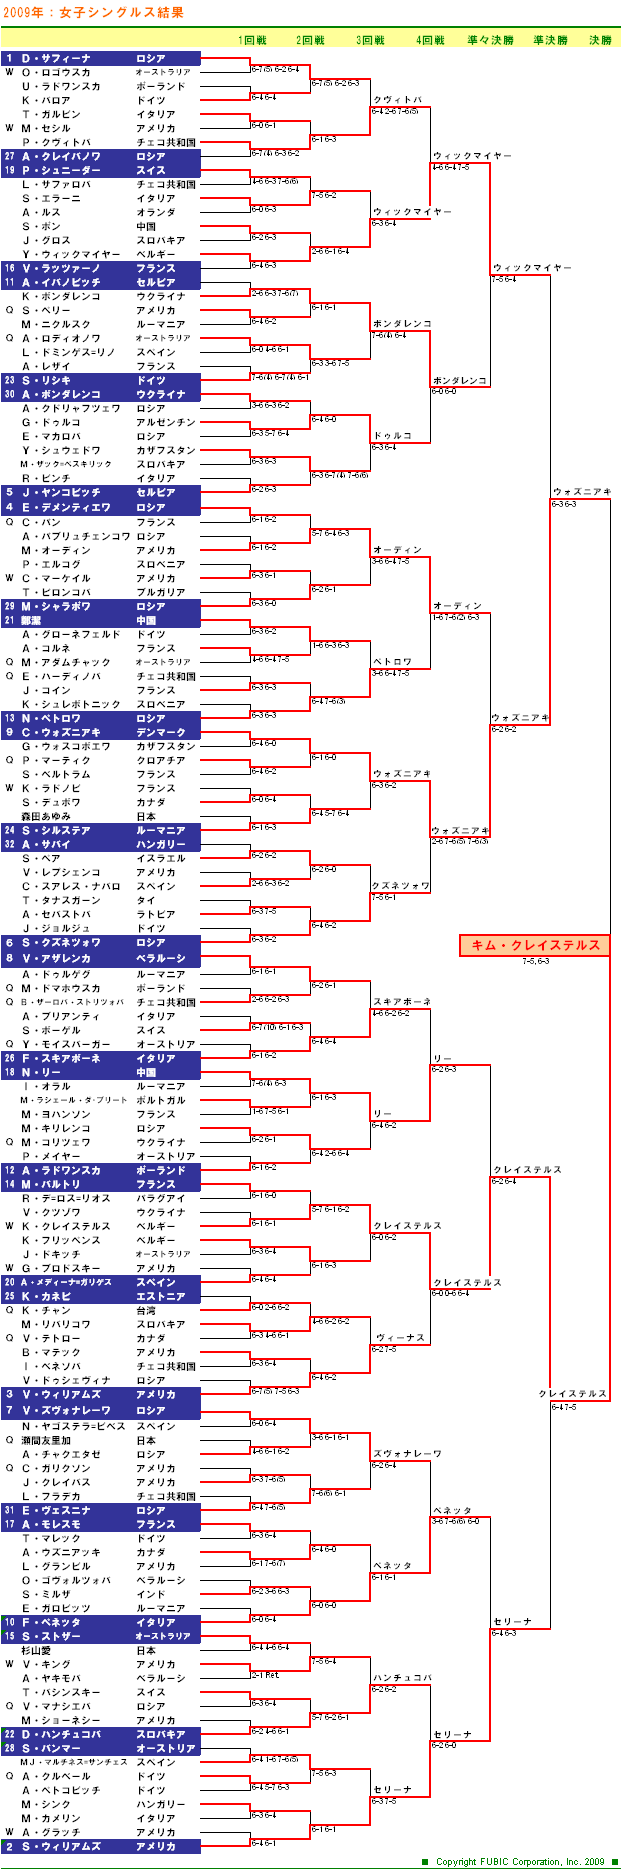 USオープンテニステニス2009　女子シングルスドロー表